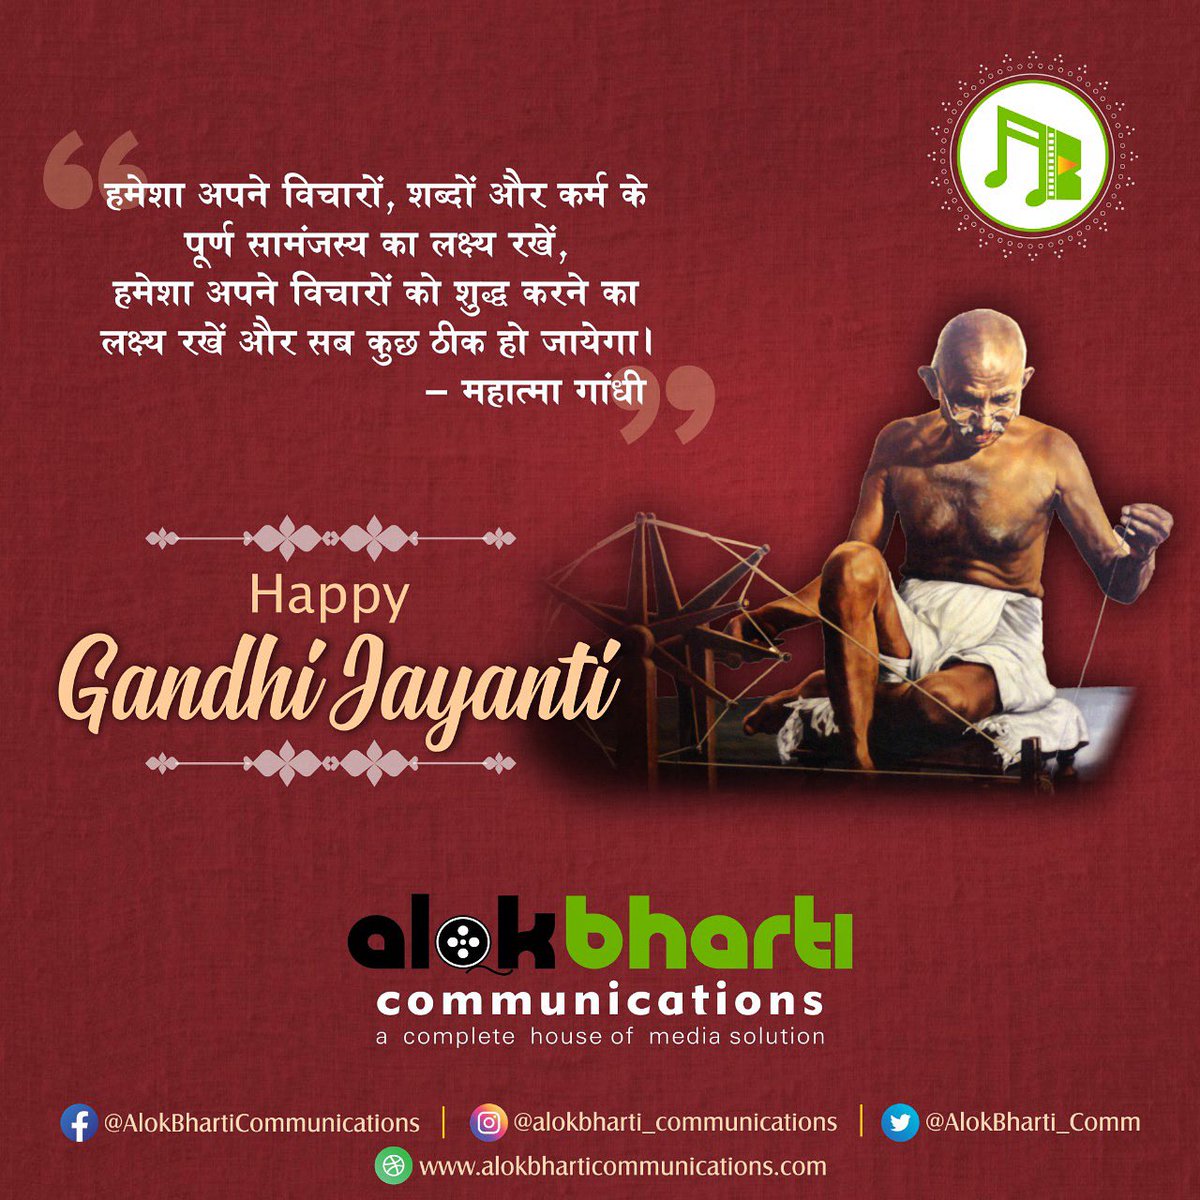 #happygandhijayanti 🙏🏻✨
.
.
.
#bapu #mahatamagandhi #gandhijayanti #greetingsoftheday #adagency #ranchi #jharkhand